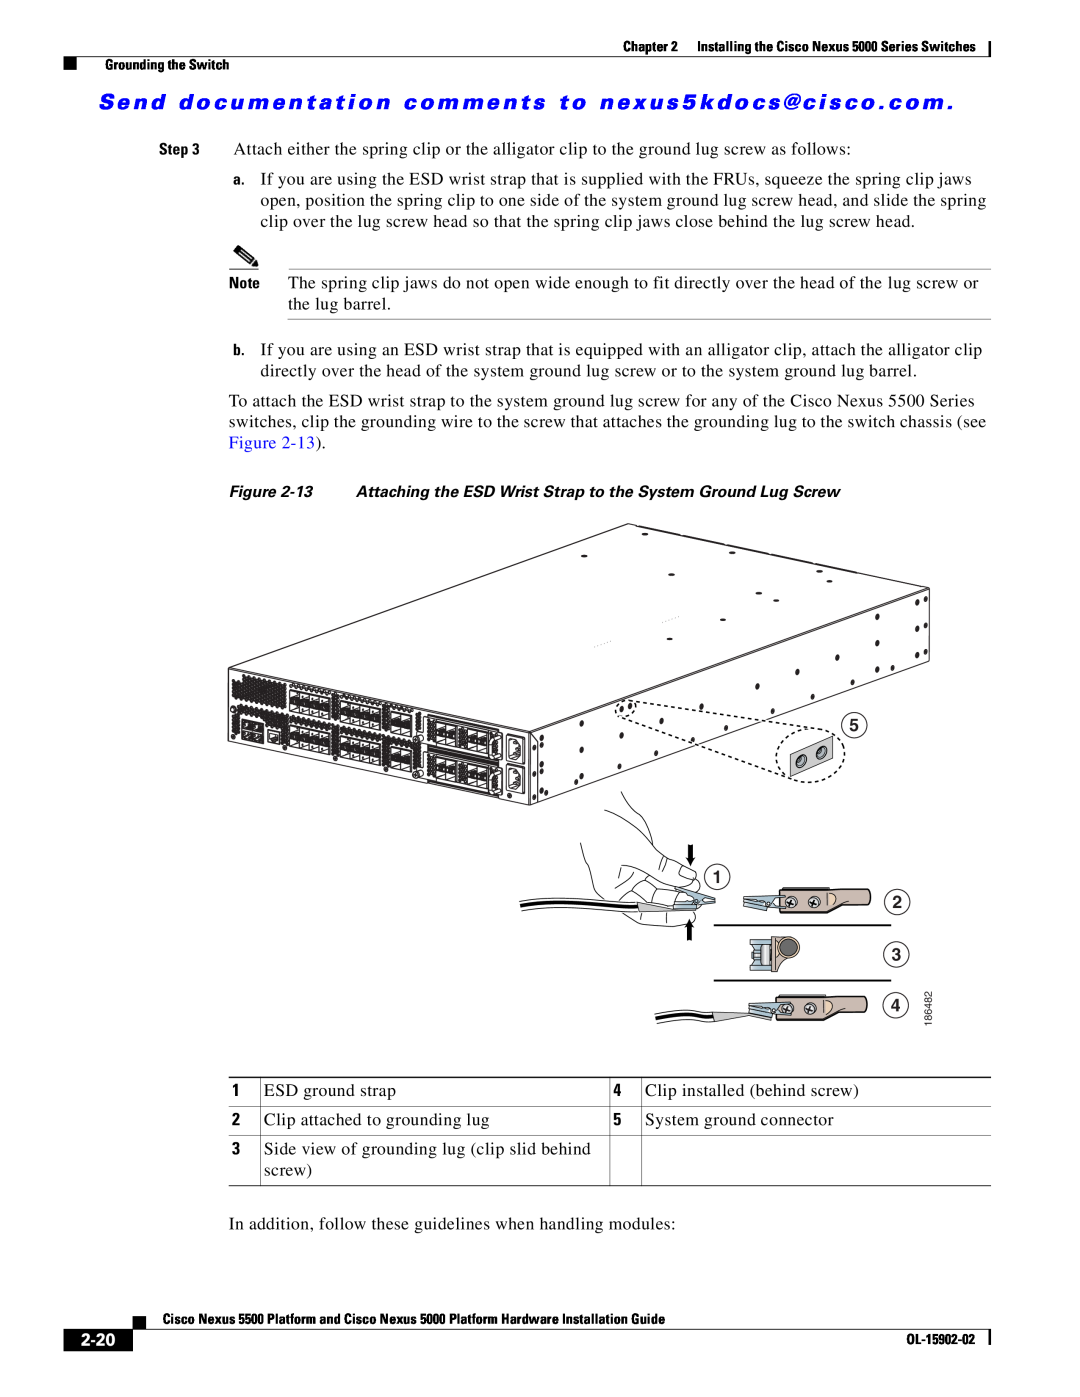 Cisco Systems 5000 manual ESD ground strap, 2-20 